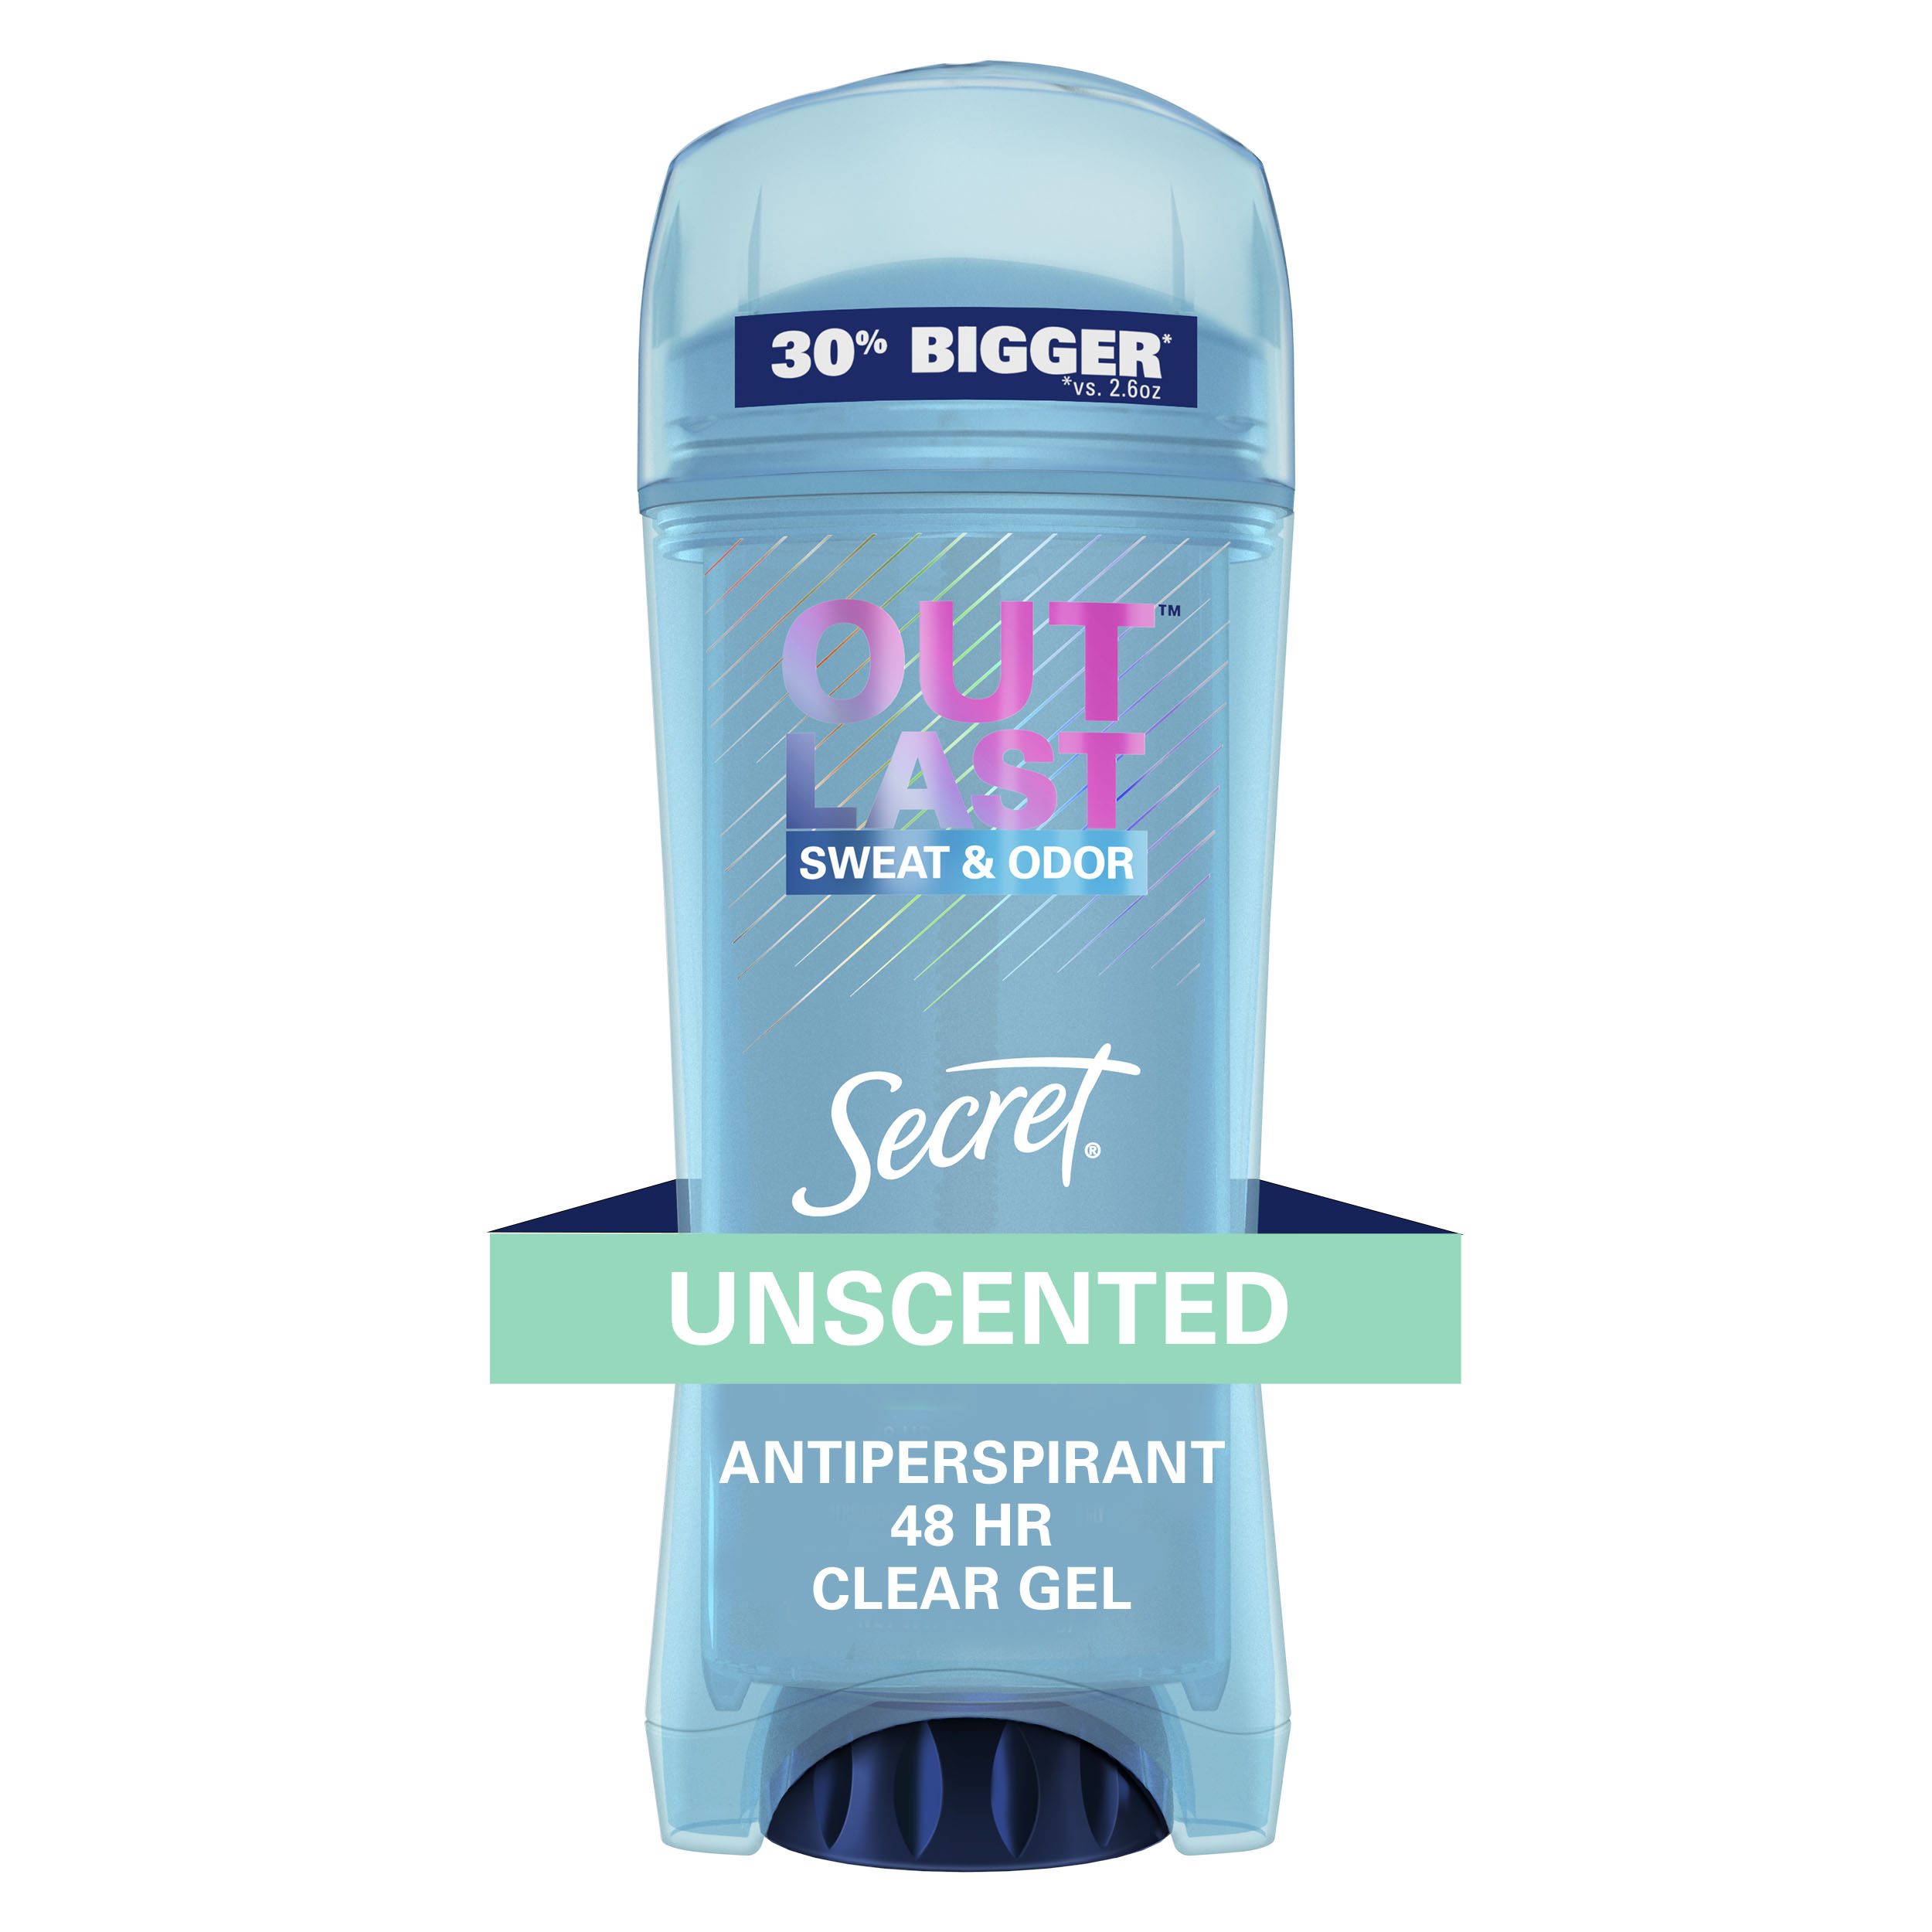 Secret Outlast Clear Gel Antiperspirant Deodorant for Women, Unscented, 3.4 oz - image 1 of 12